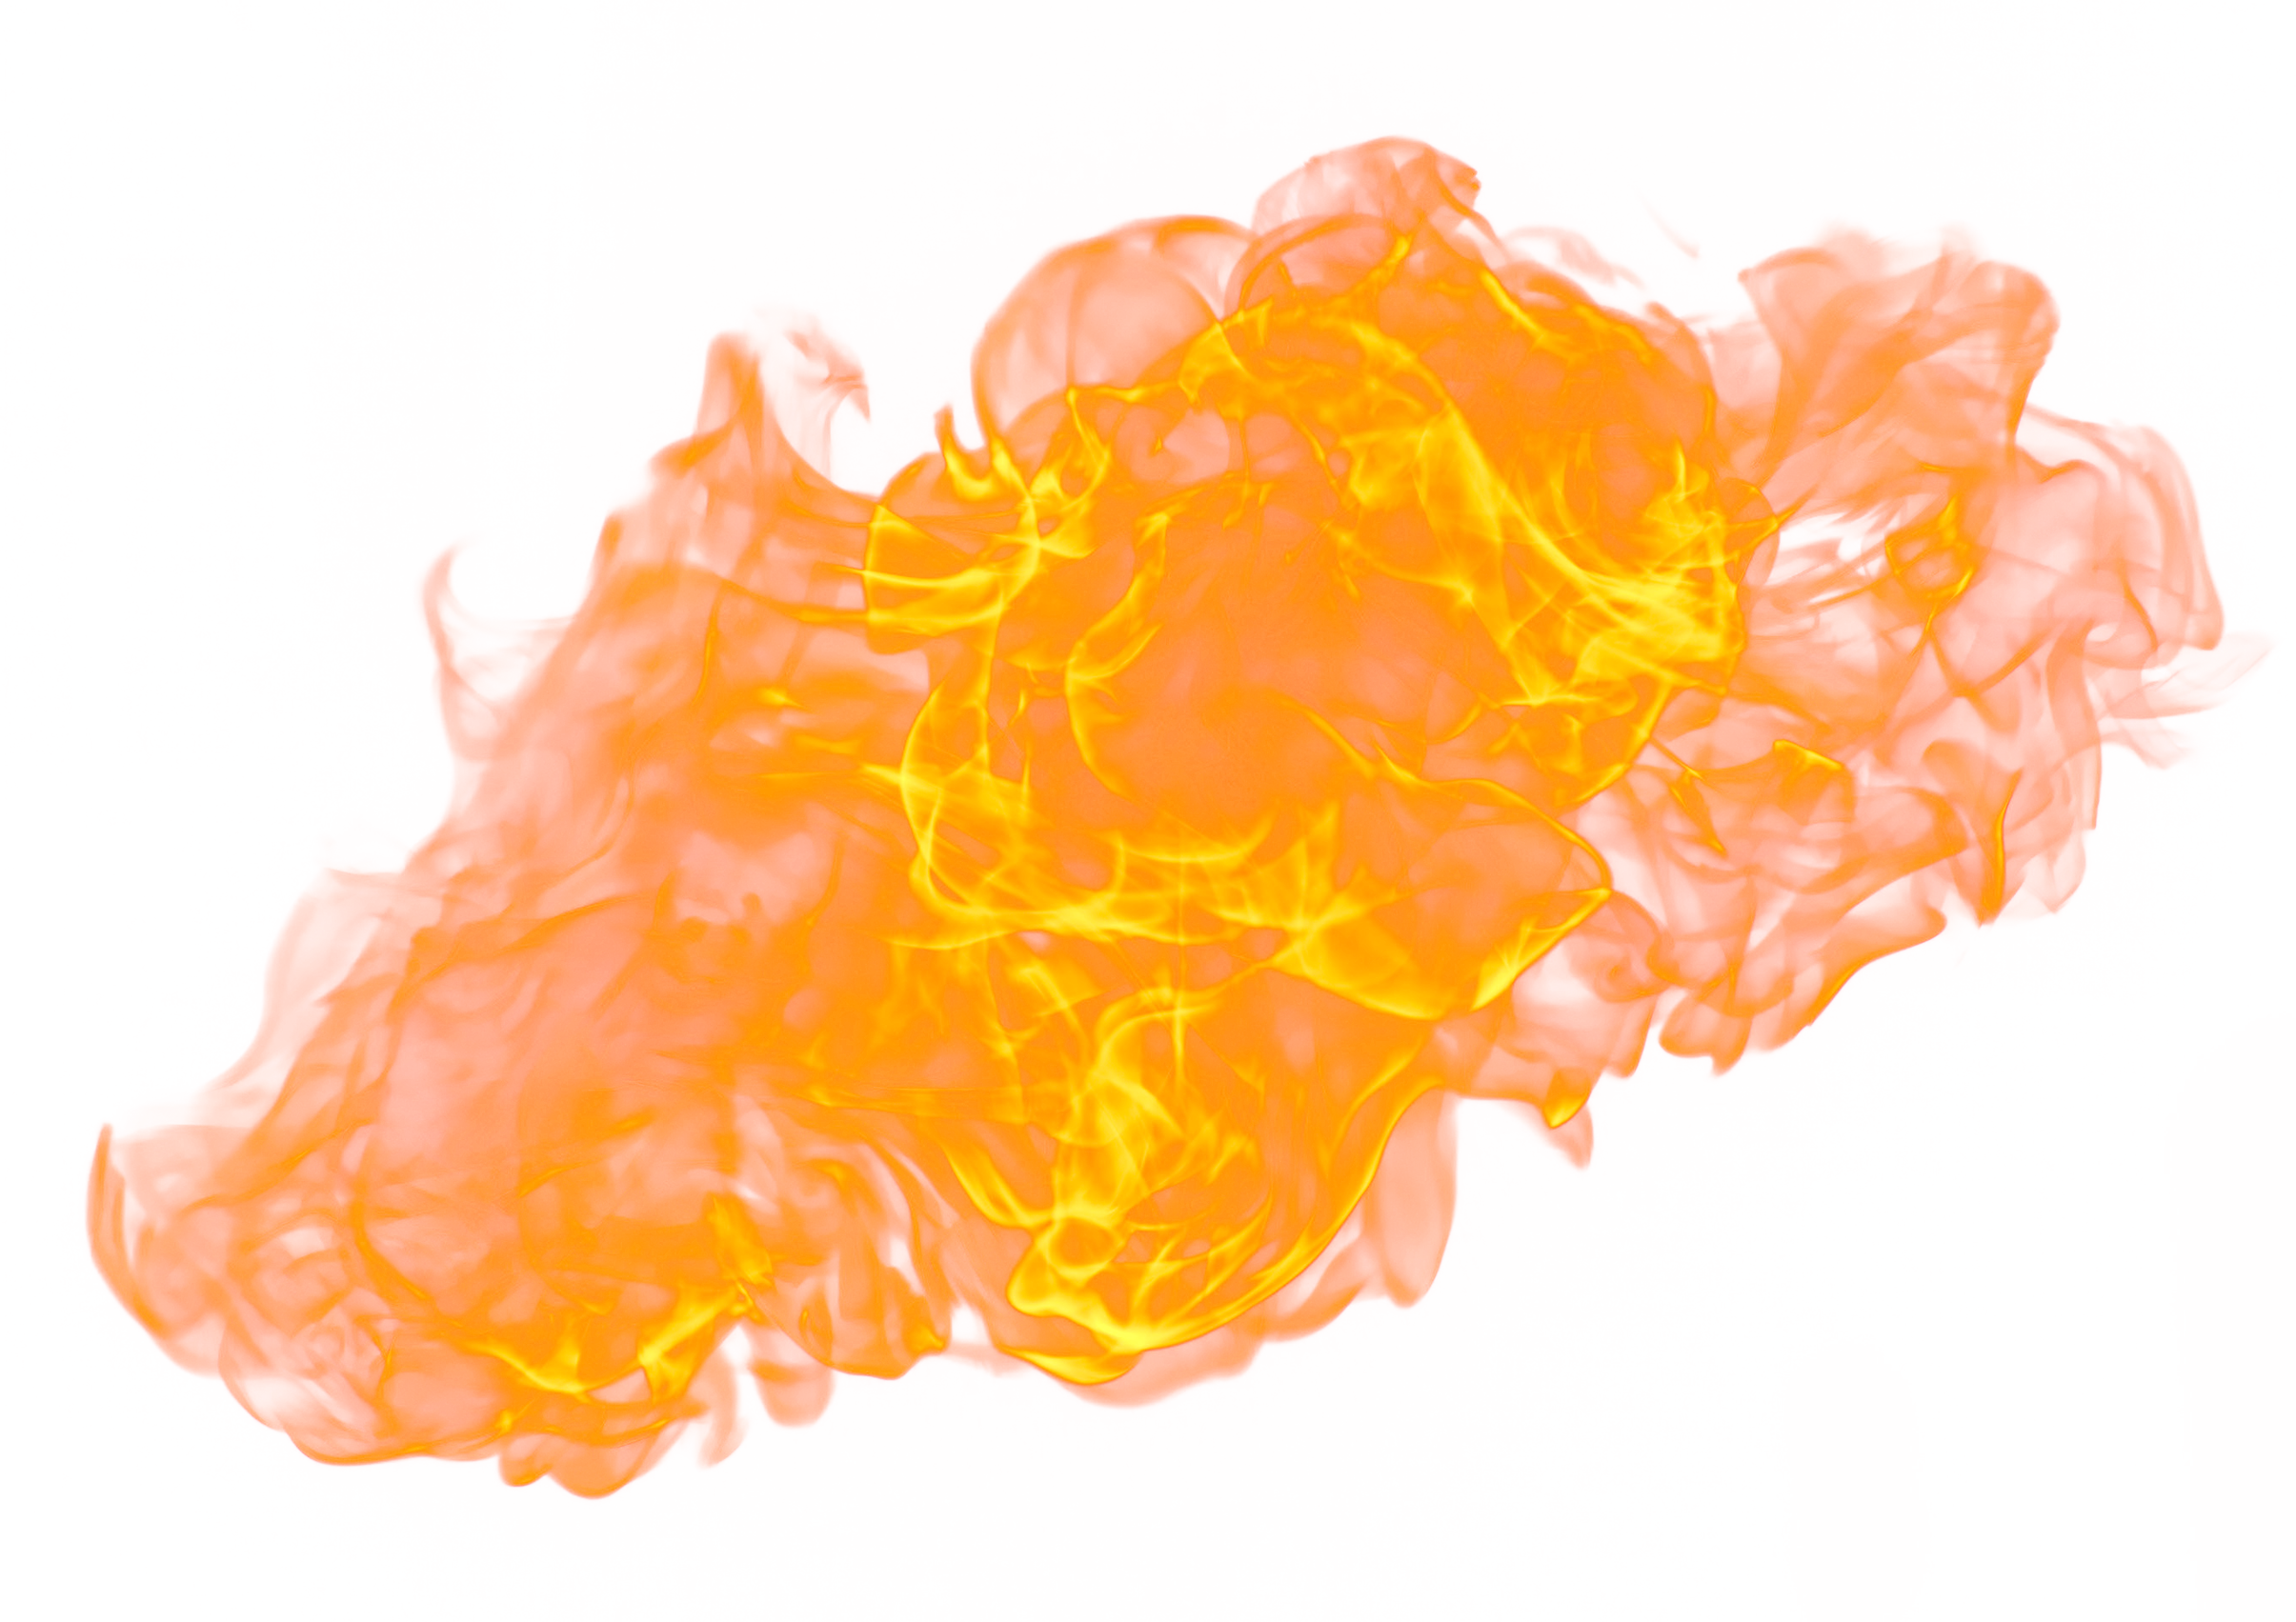 Orange Fire Flames PNG HD Quality